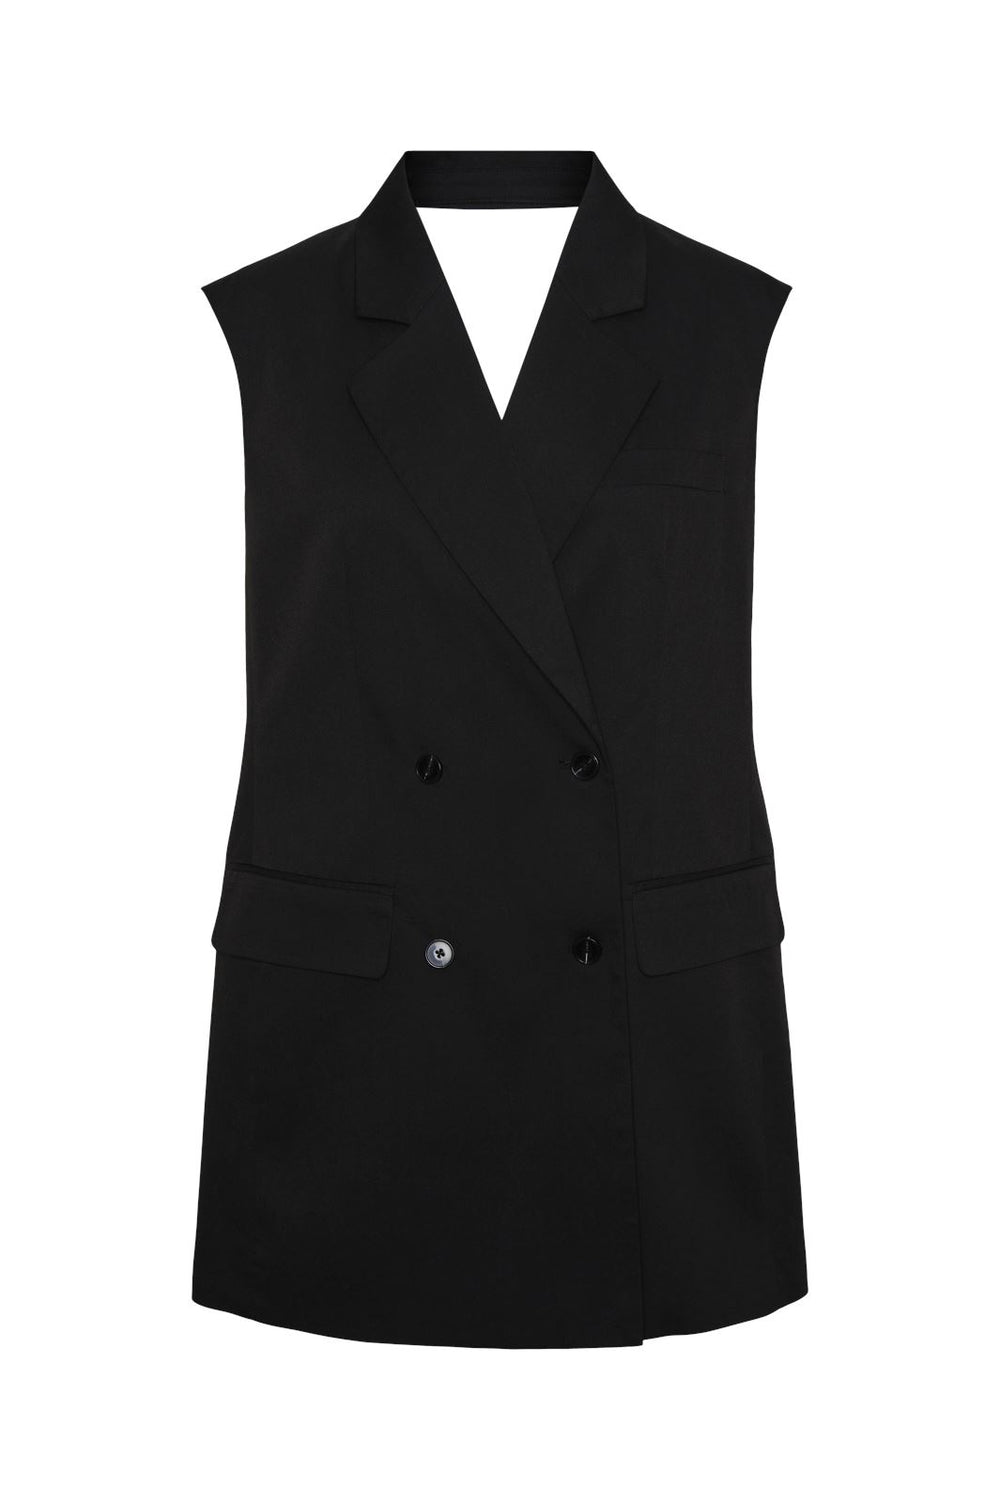 Pieces - Pcbow Sl Tailored Short Dress Jit - 4671056 Black